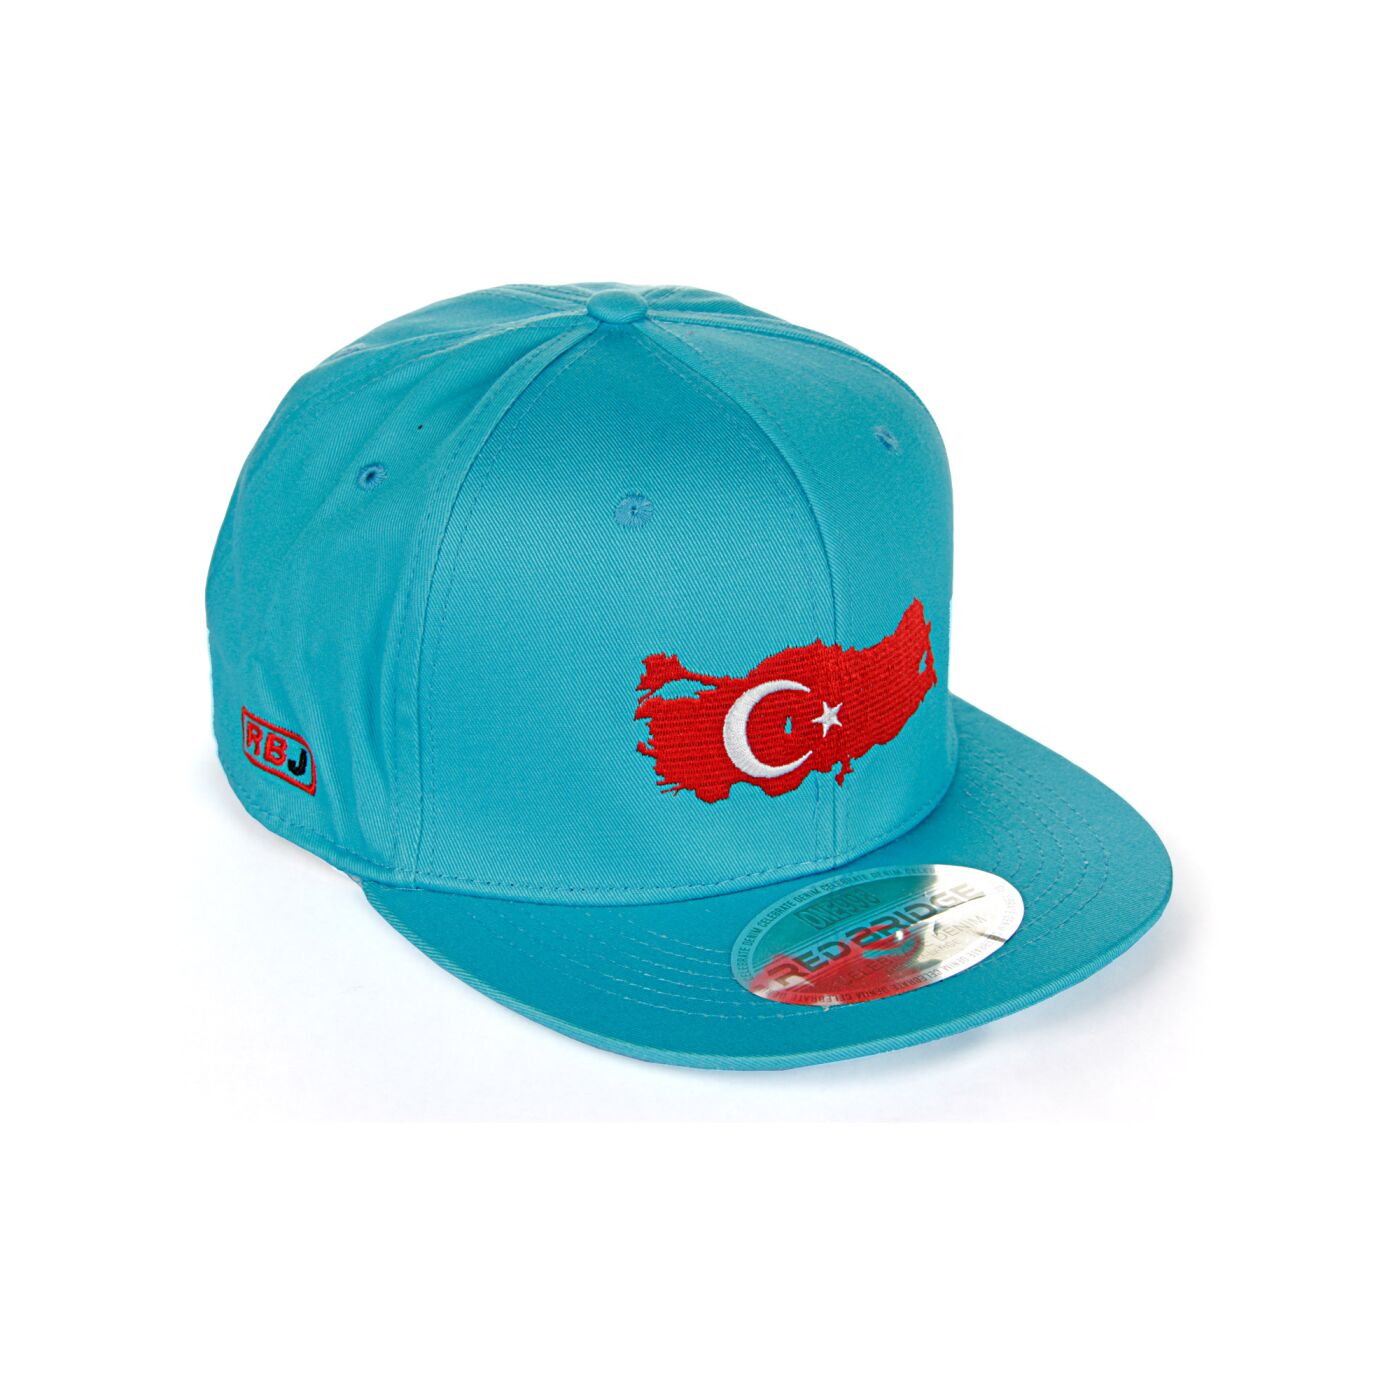 Red Bridge Unisex Türkei Cap Snapback Bestickt R41757 - Redbridge - O, €  14,90 | Baseball Caps